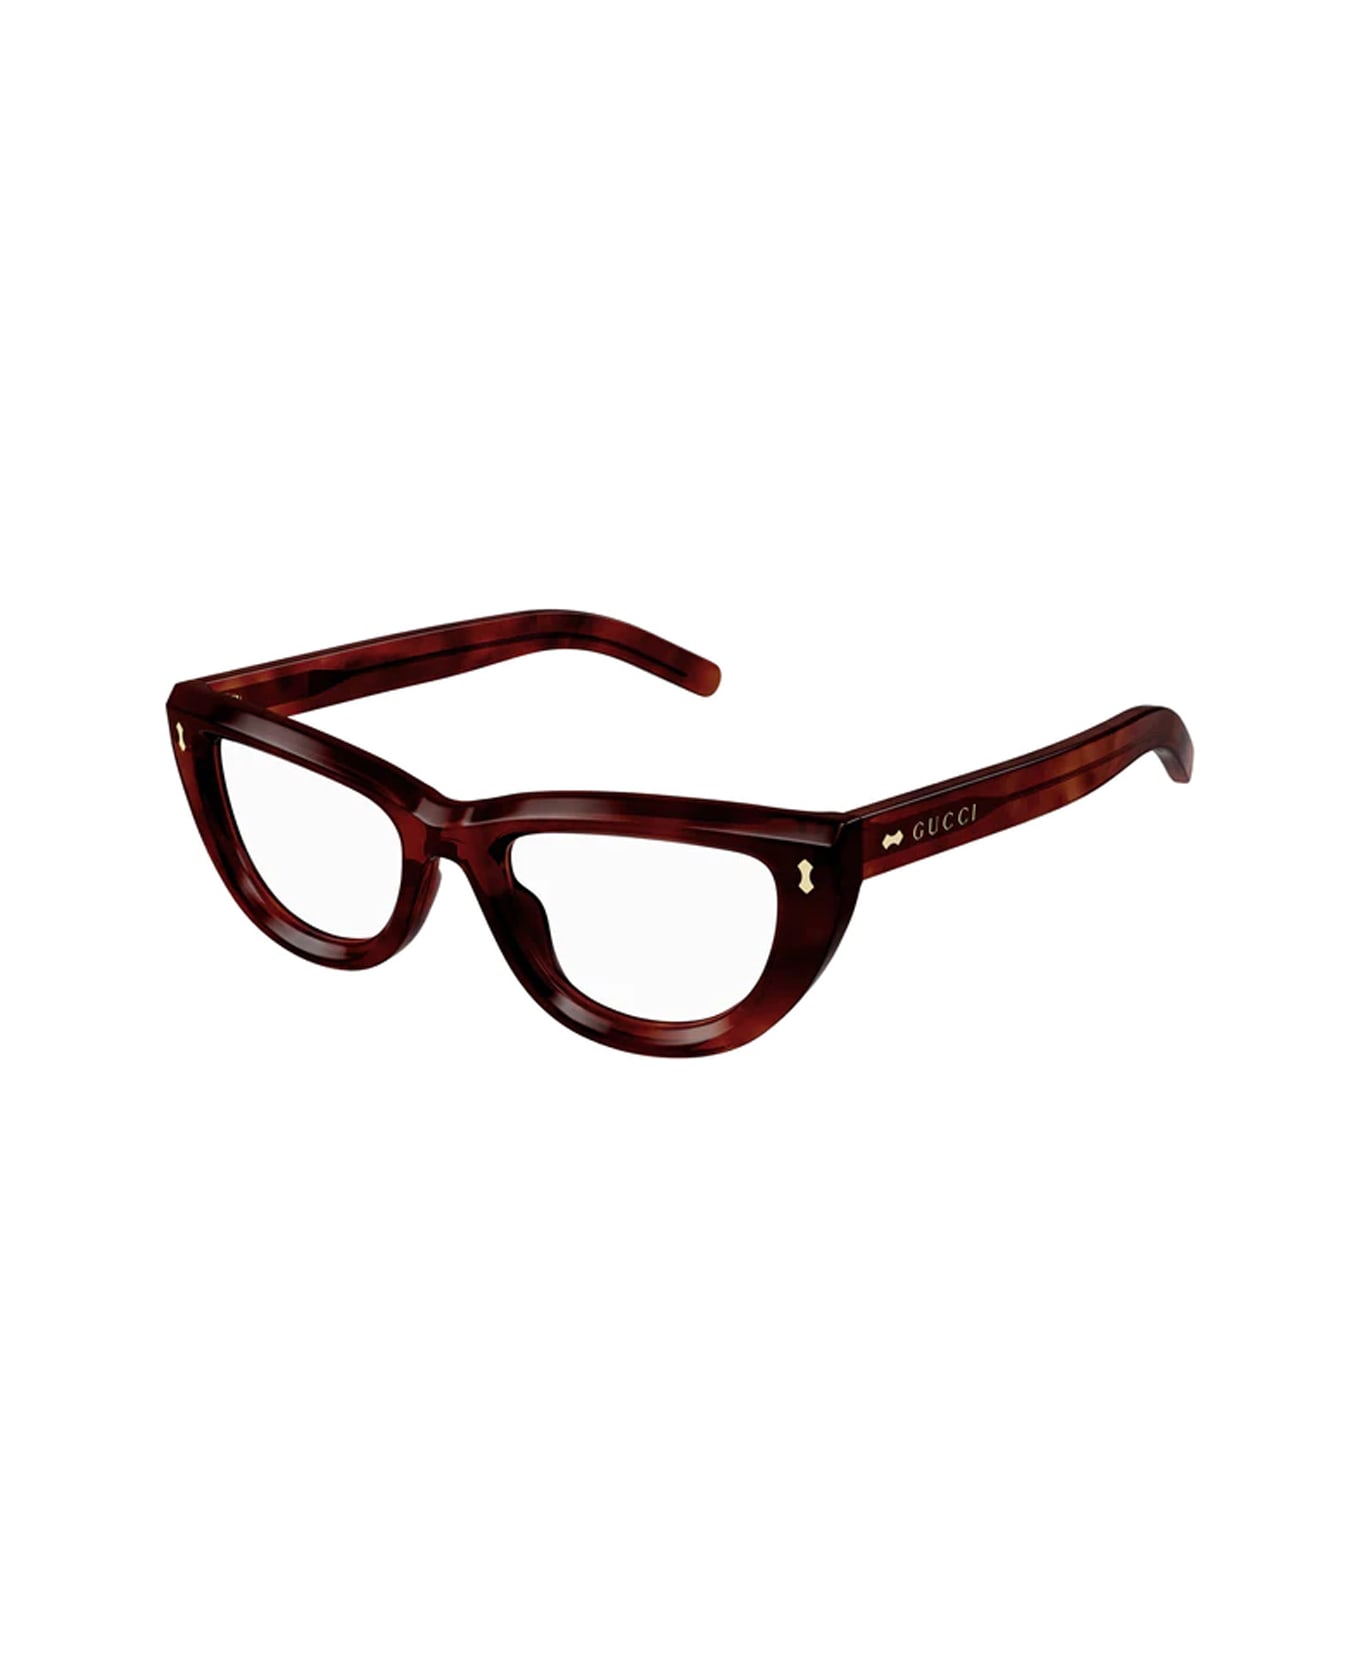 Gucci Eyewear bleu gucci Gg1521o Linea Rivets 003 Glasses - Rosso